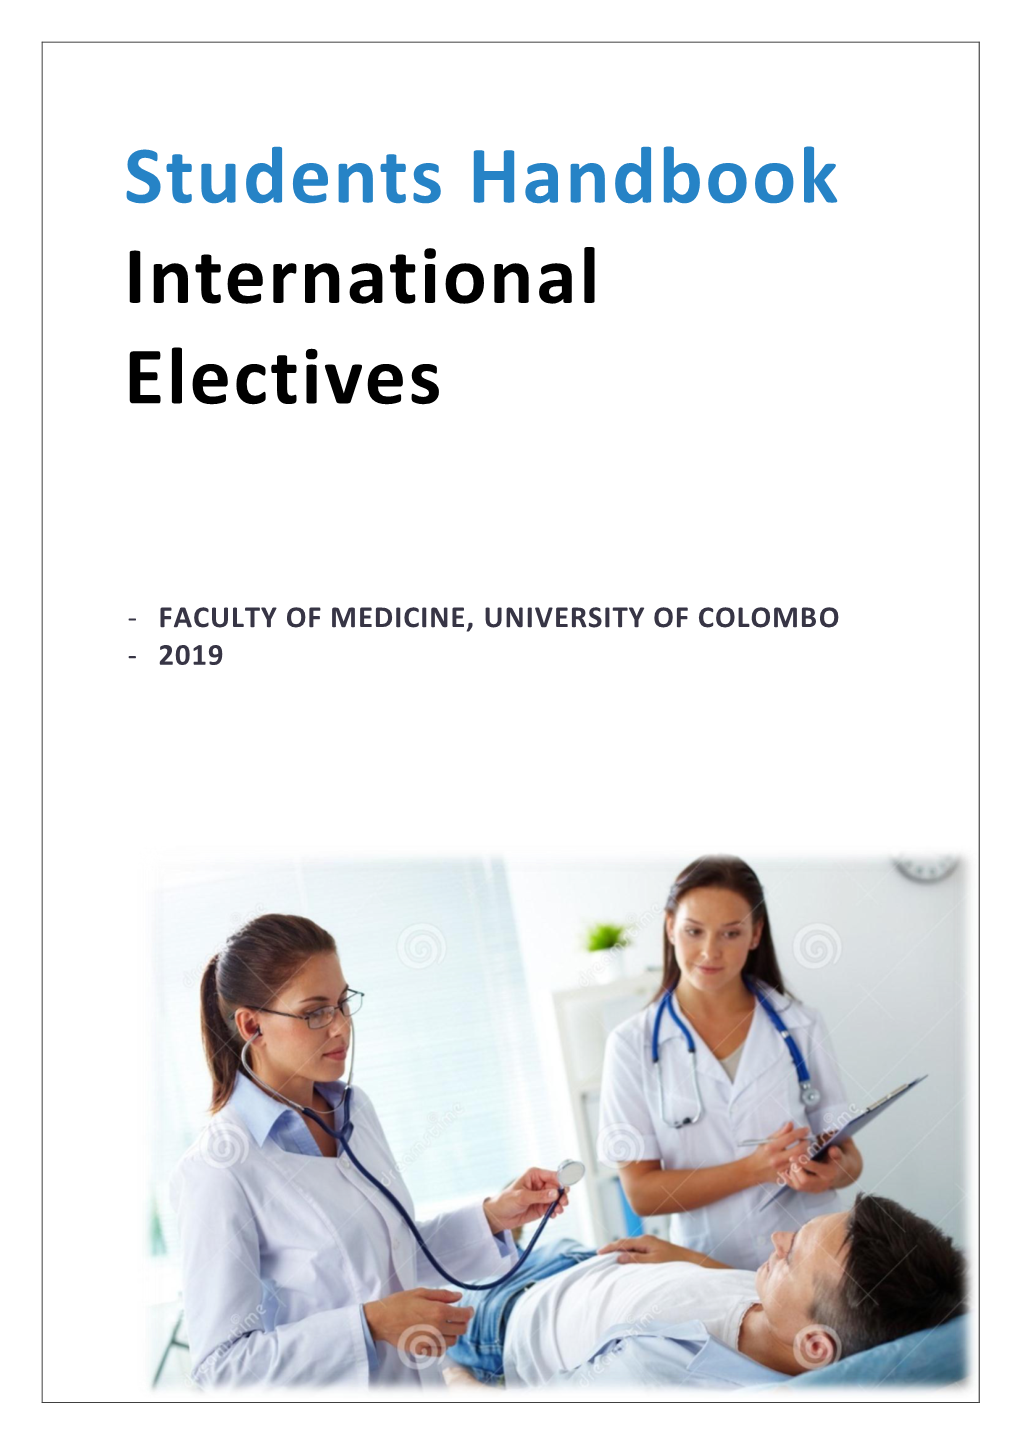 Students Handbook International Electives